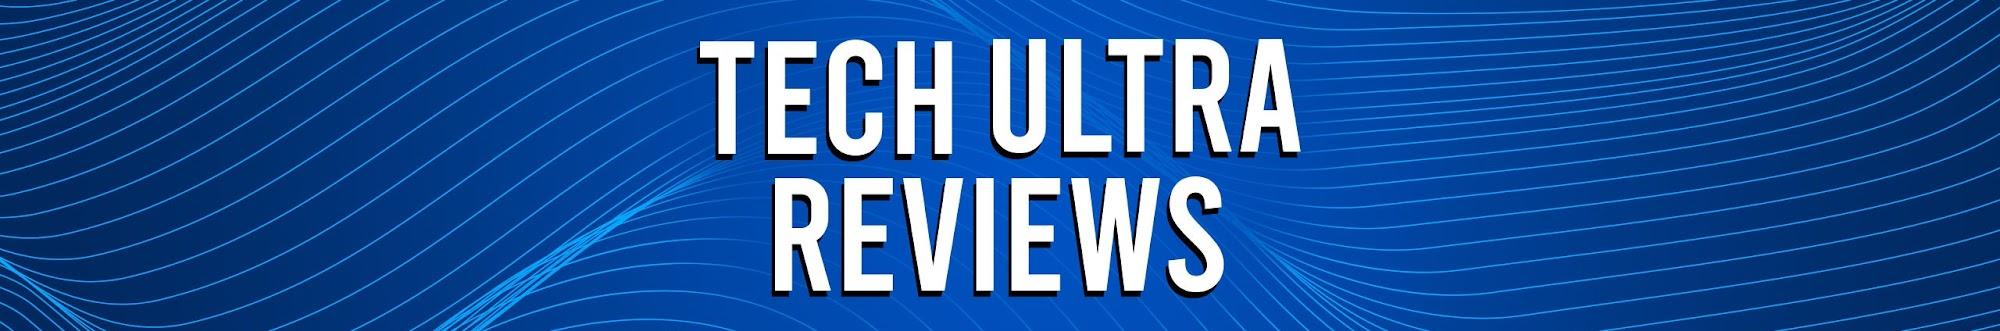 Tech Ultra Reviews